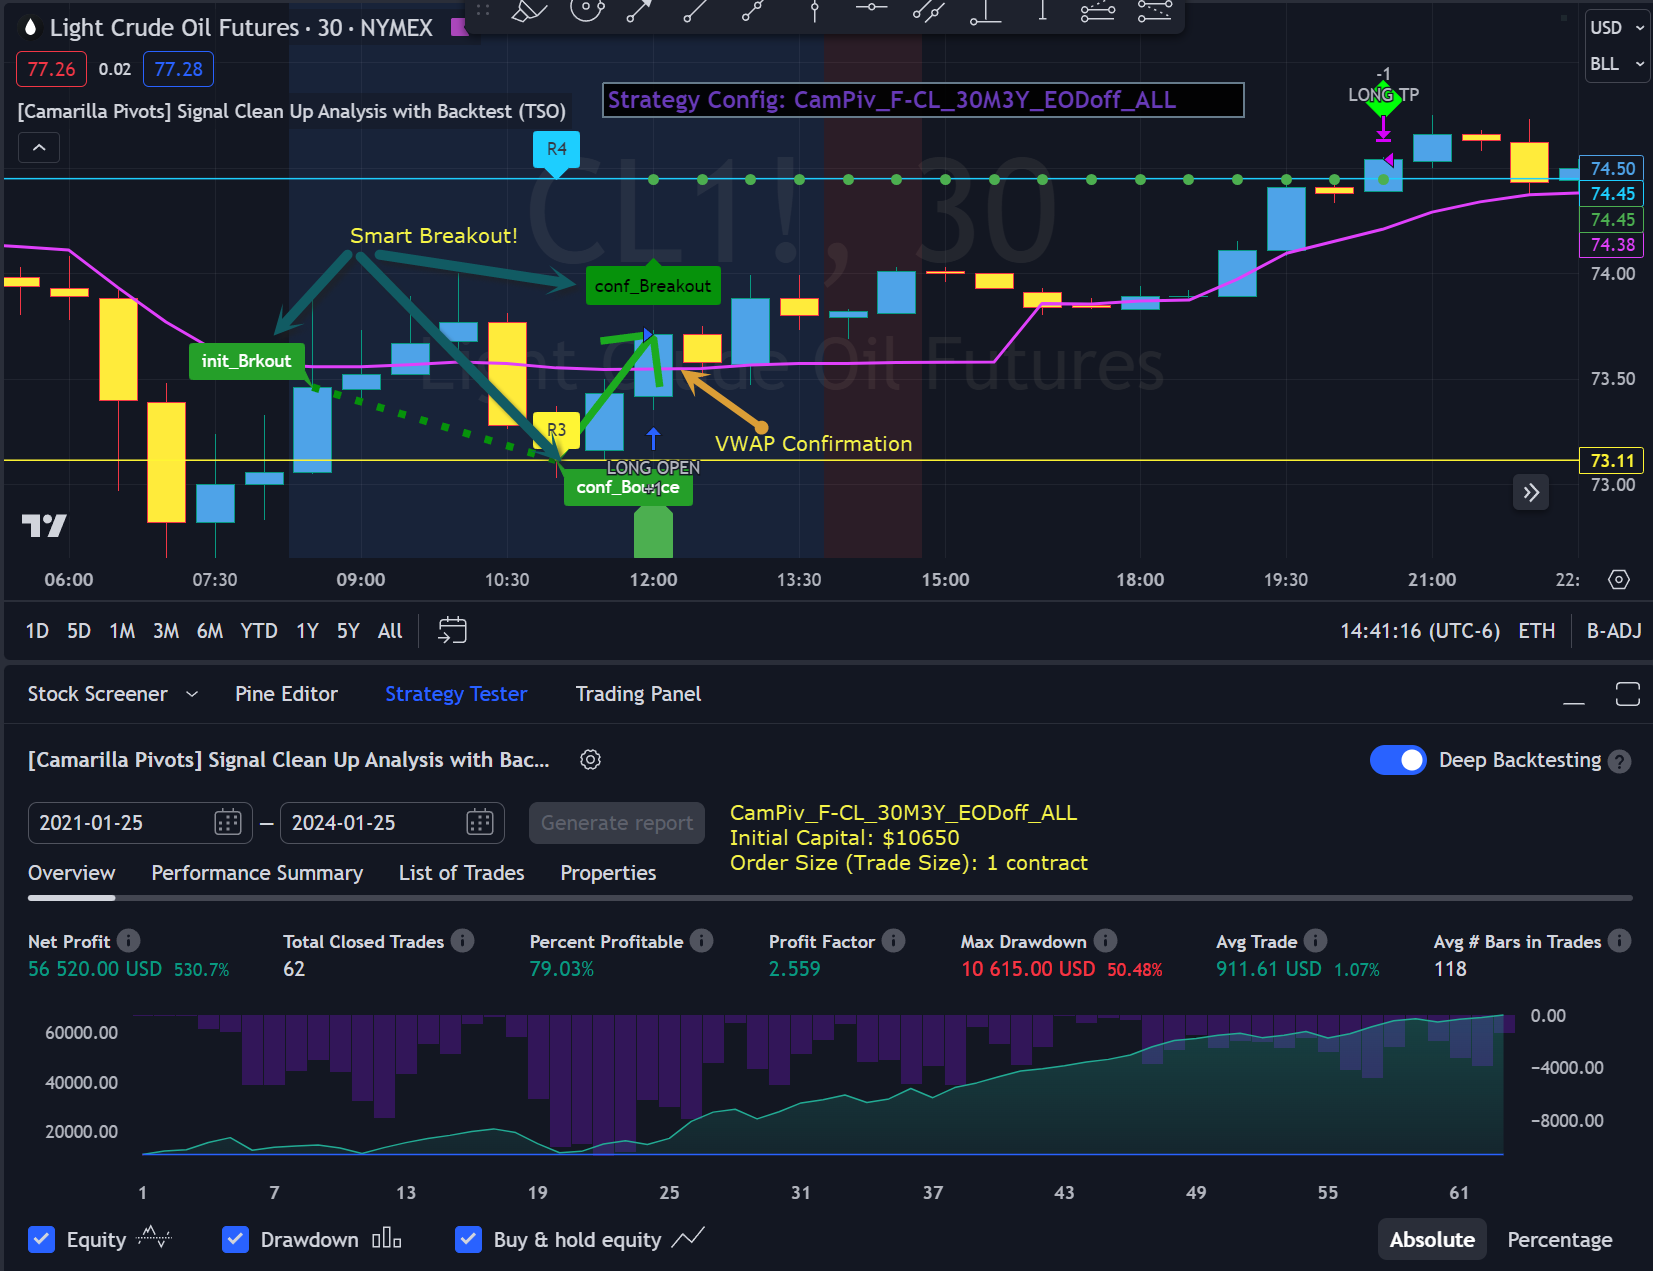 Trading Indicator Screenshots - CL (Light Crude Oil Futures)